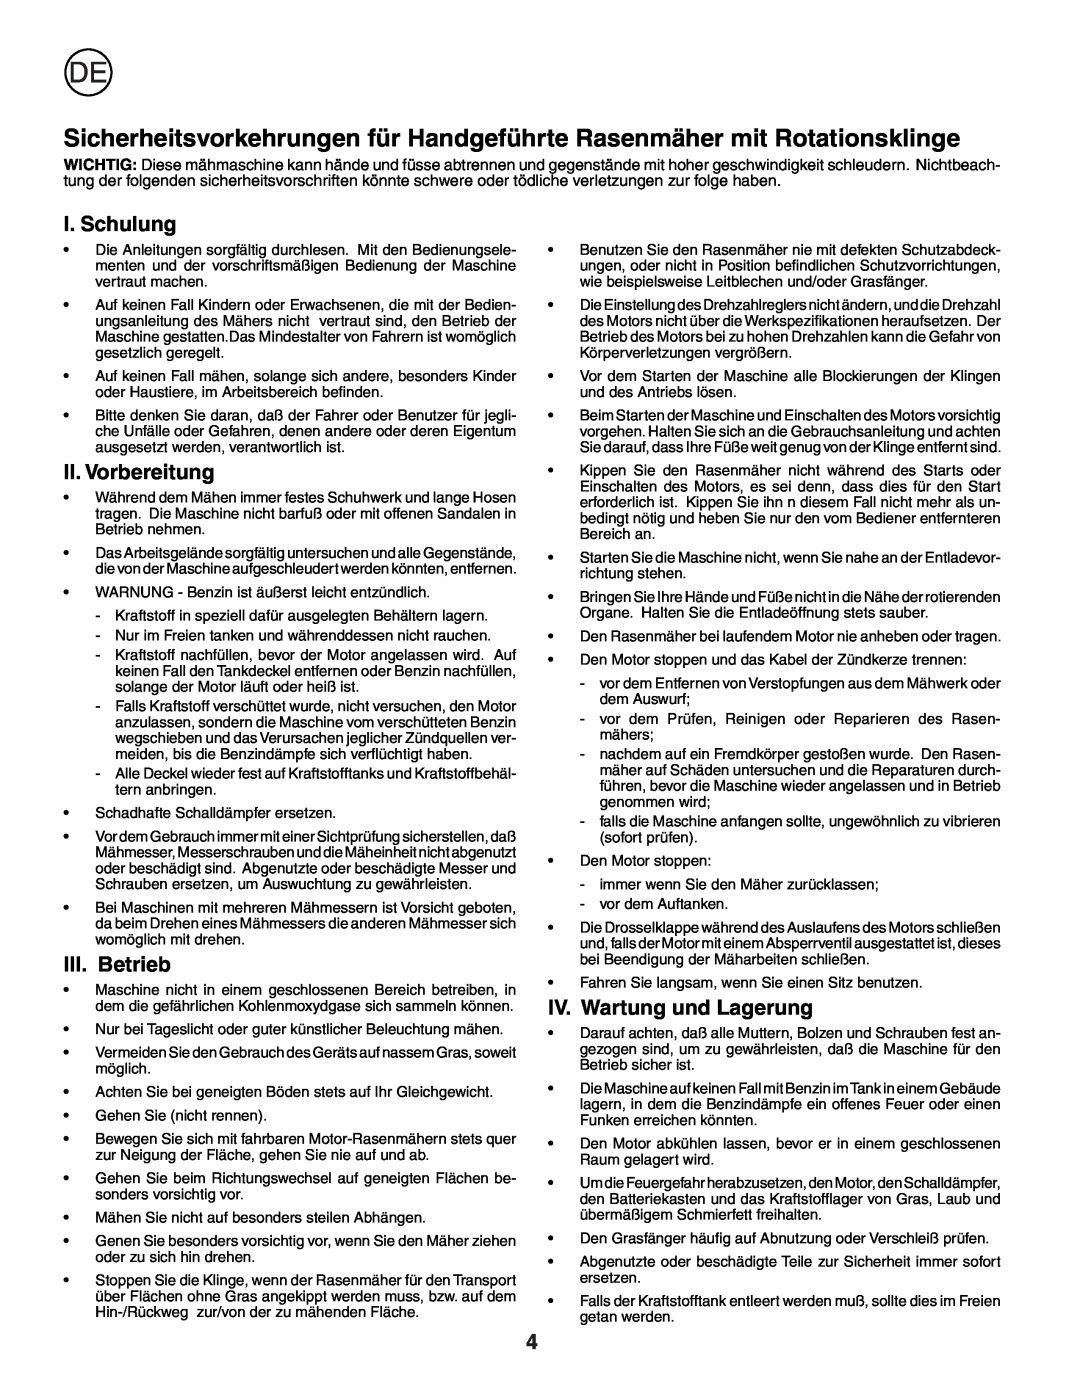 Husqvarna R152SV instruction manual I. Schulung, II. Vorbereitung, III. Betrieb, IV. Wartung und Lagerung 